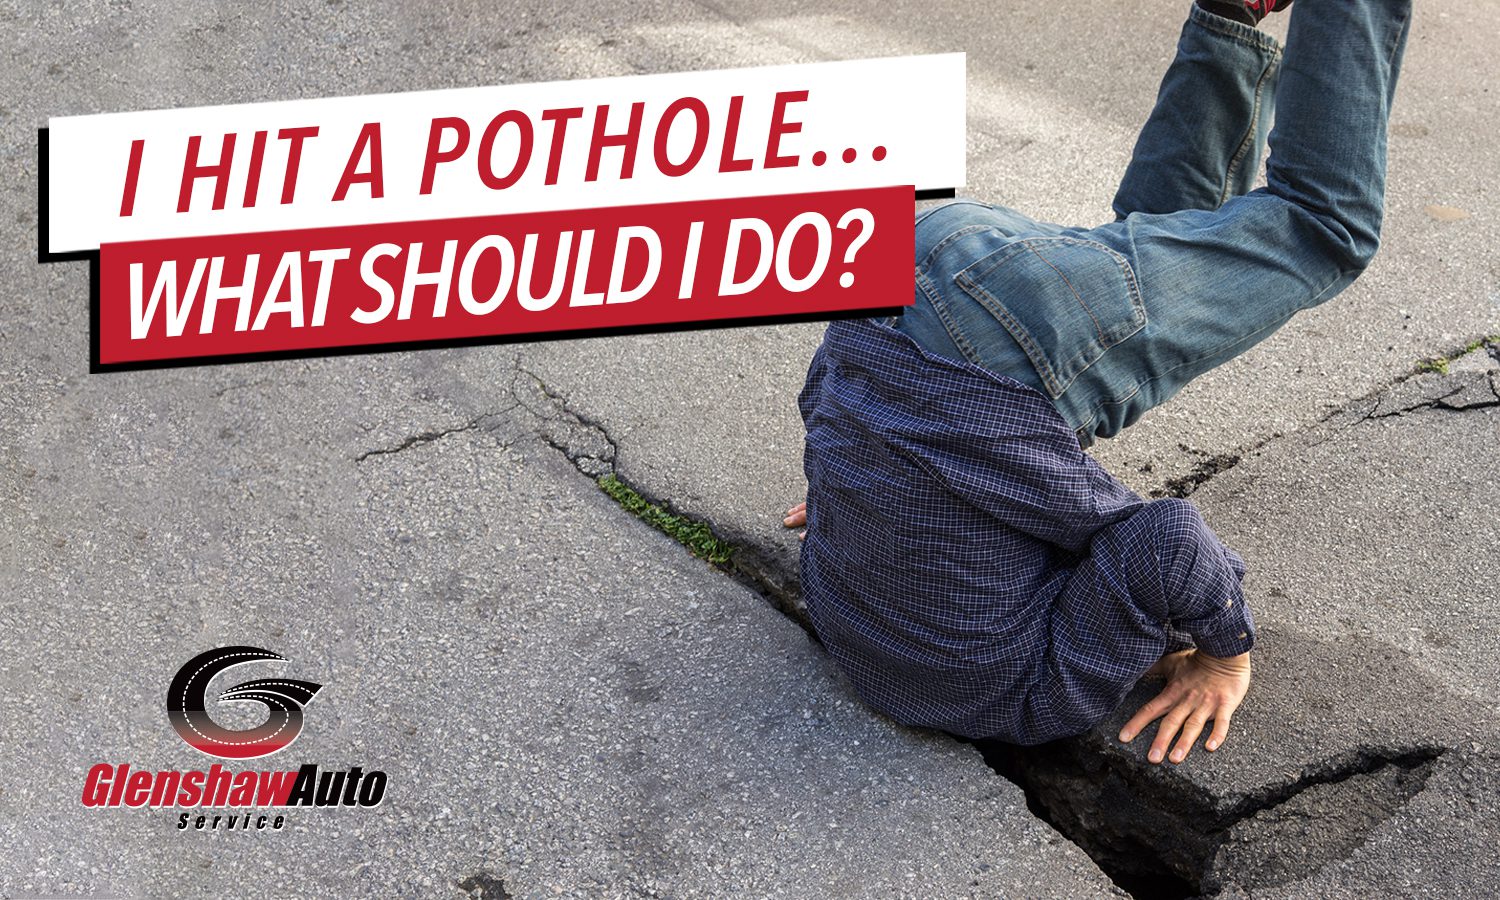 Man stuck in pothole